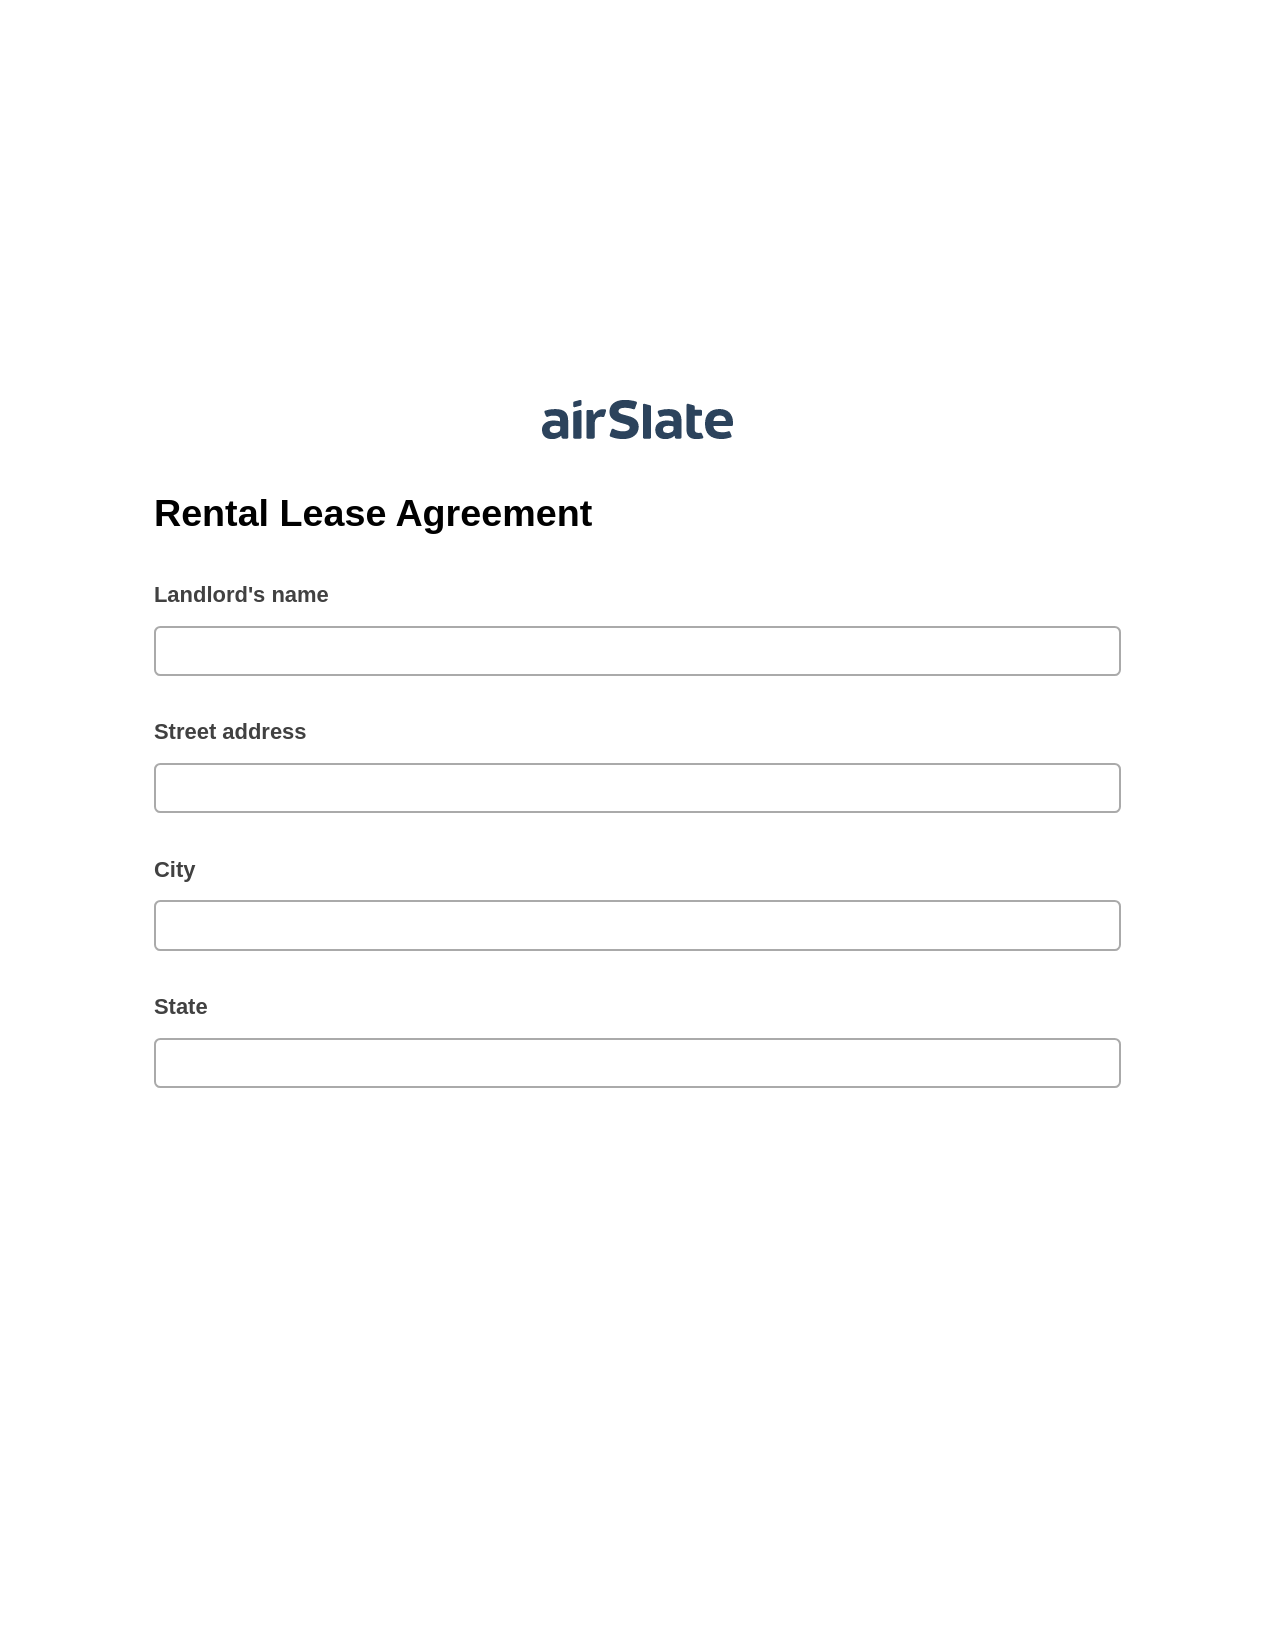 Multirole Rental Lease Agreement Pre-fill from Google Sheet Dropdown Options Bot, Google Cloud Print Bot, Webhook Postfinish Bot